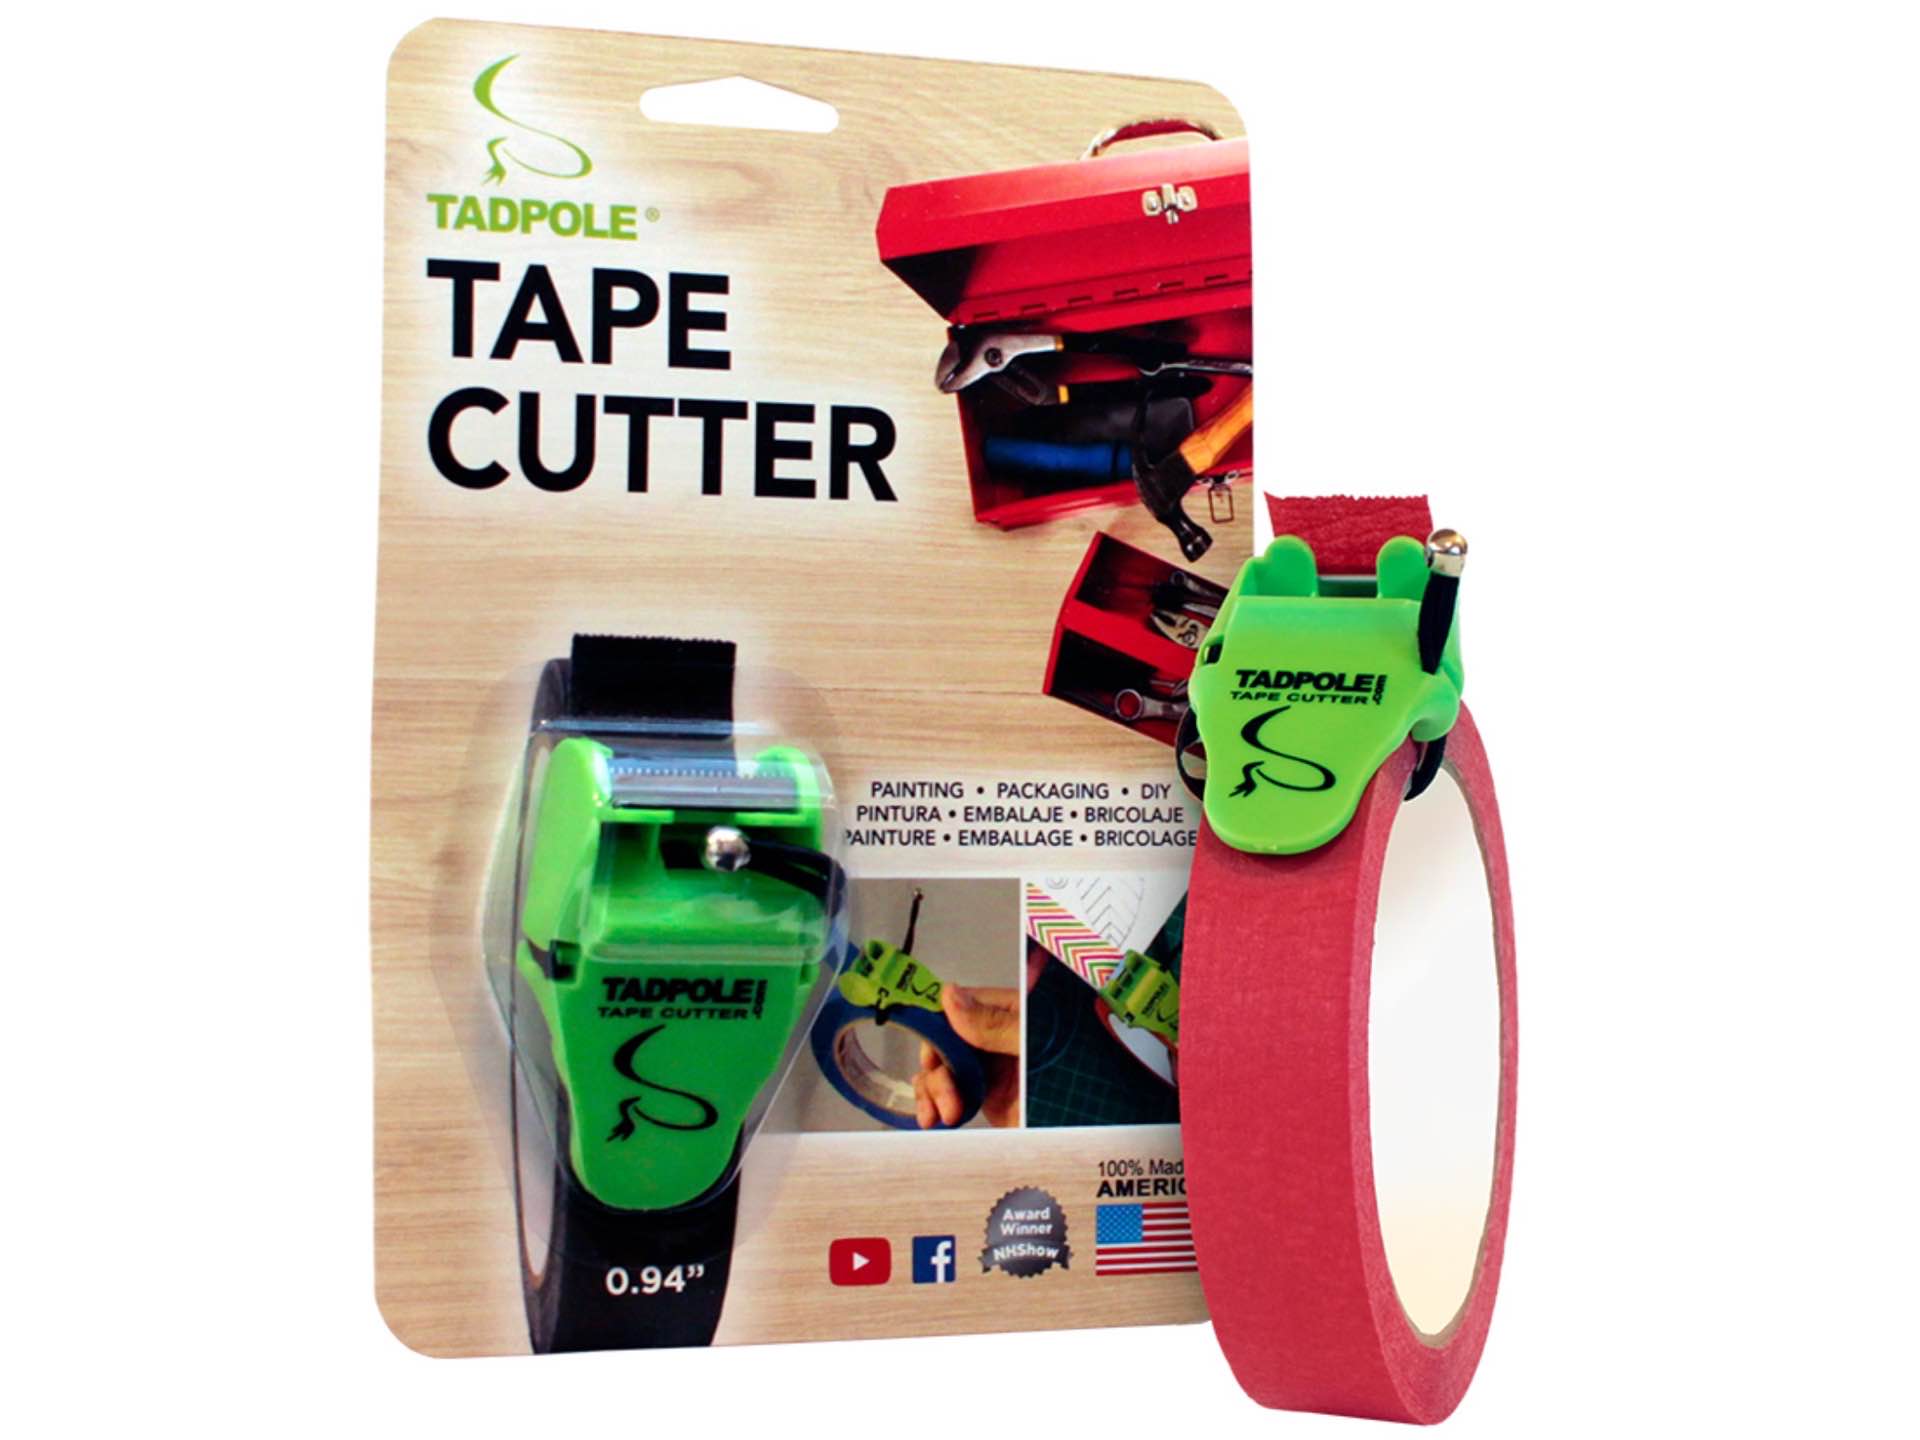 tadpole-tape-cutter